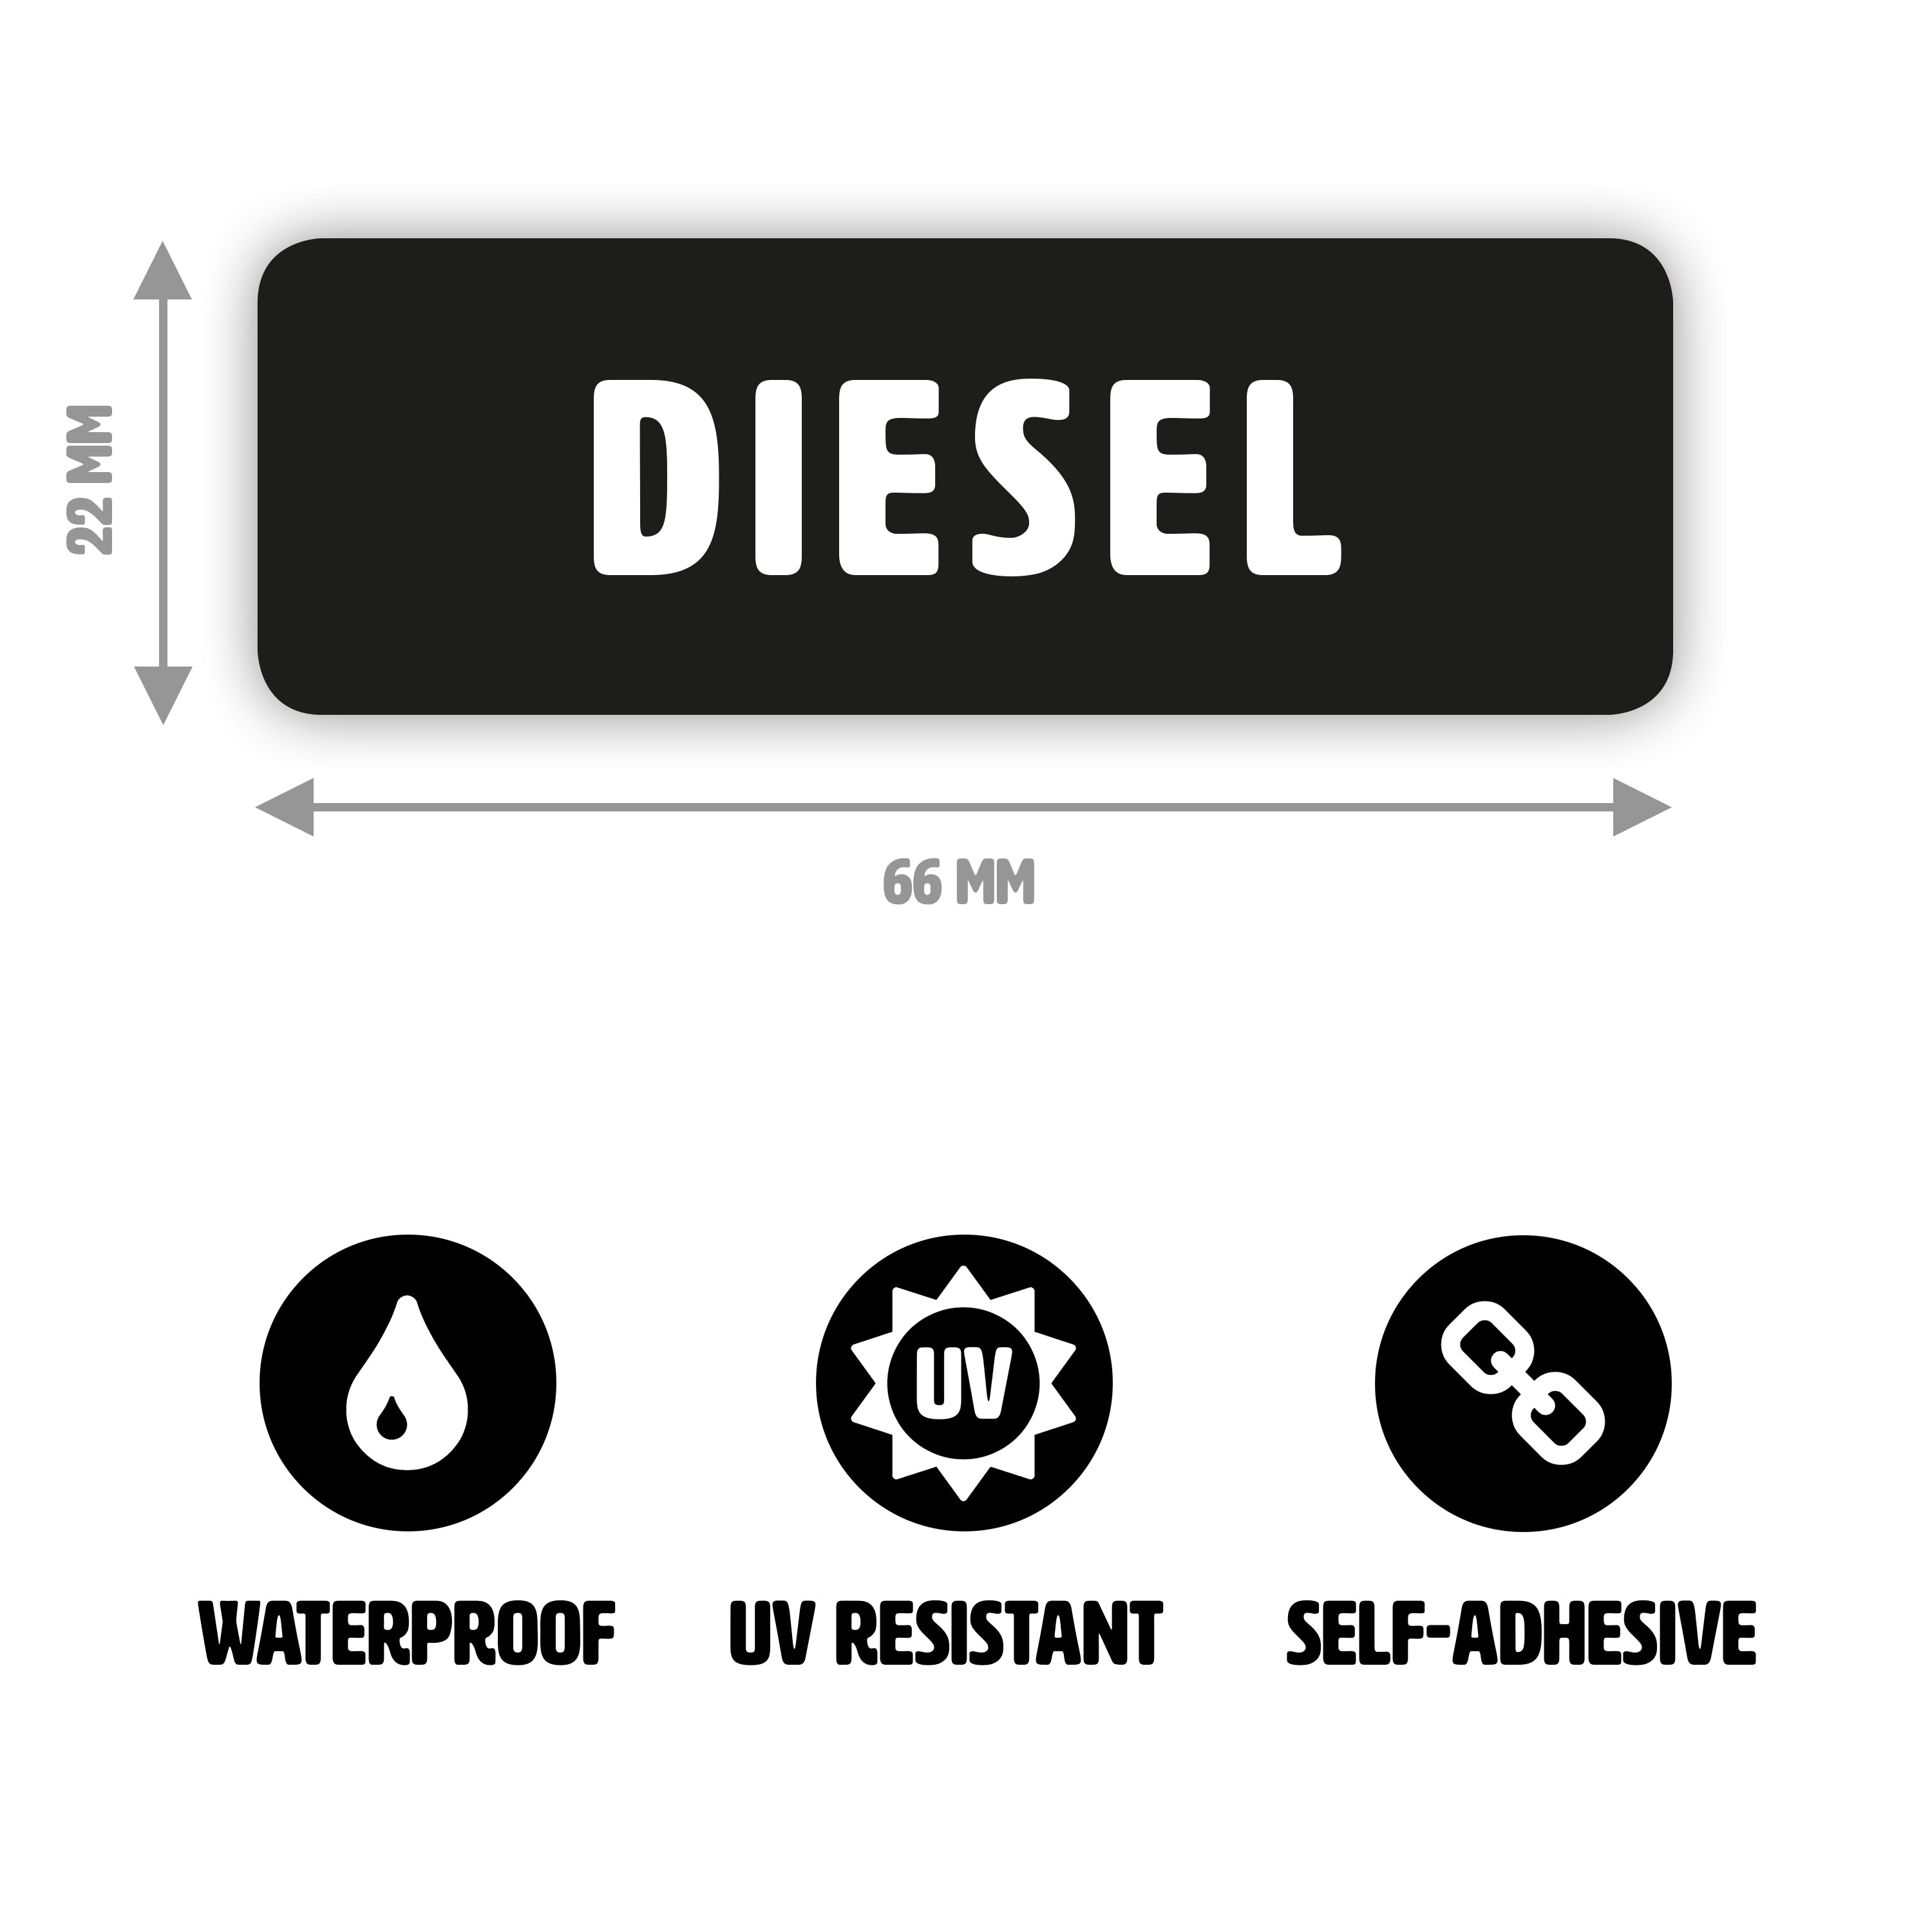 A146.1 WiFi Logo Diesel Stickers for Car Fuel Lid Sticker Size 10x7.7 cm  BLACK & RED